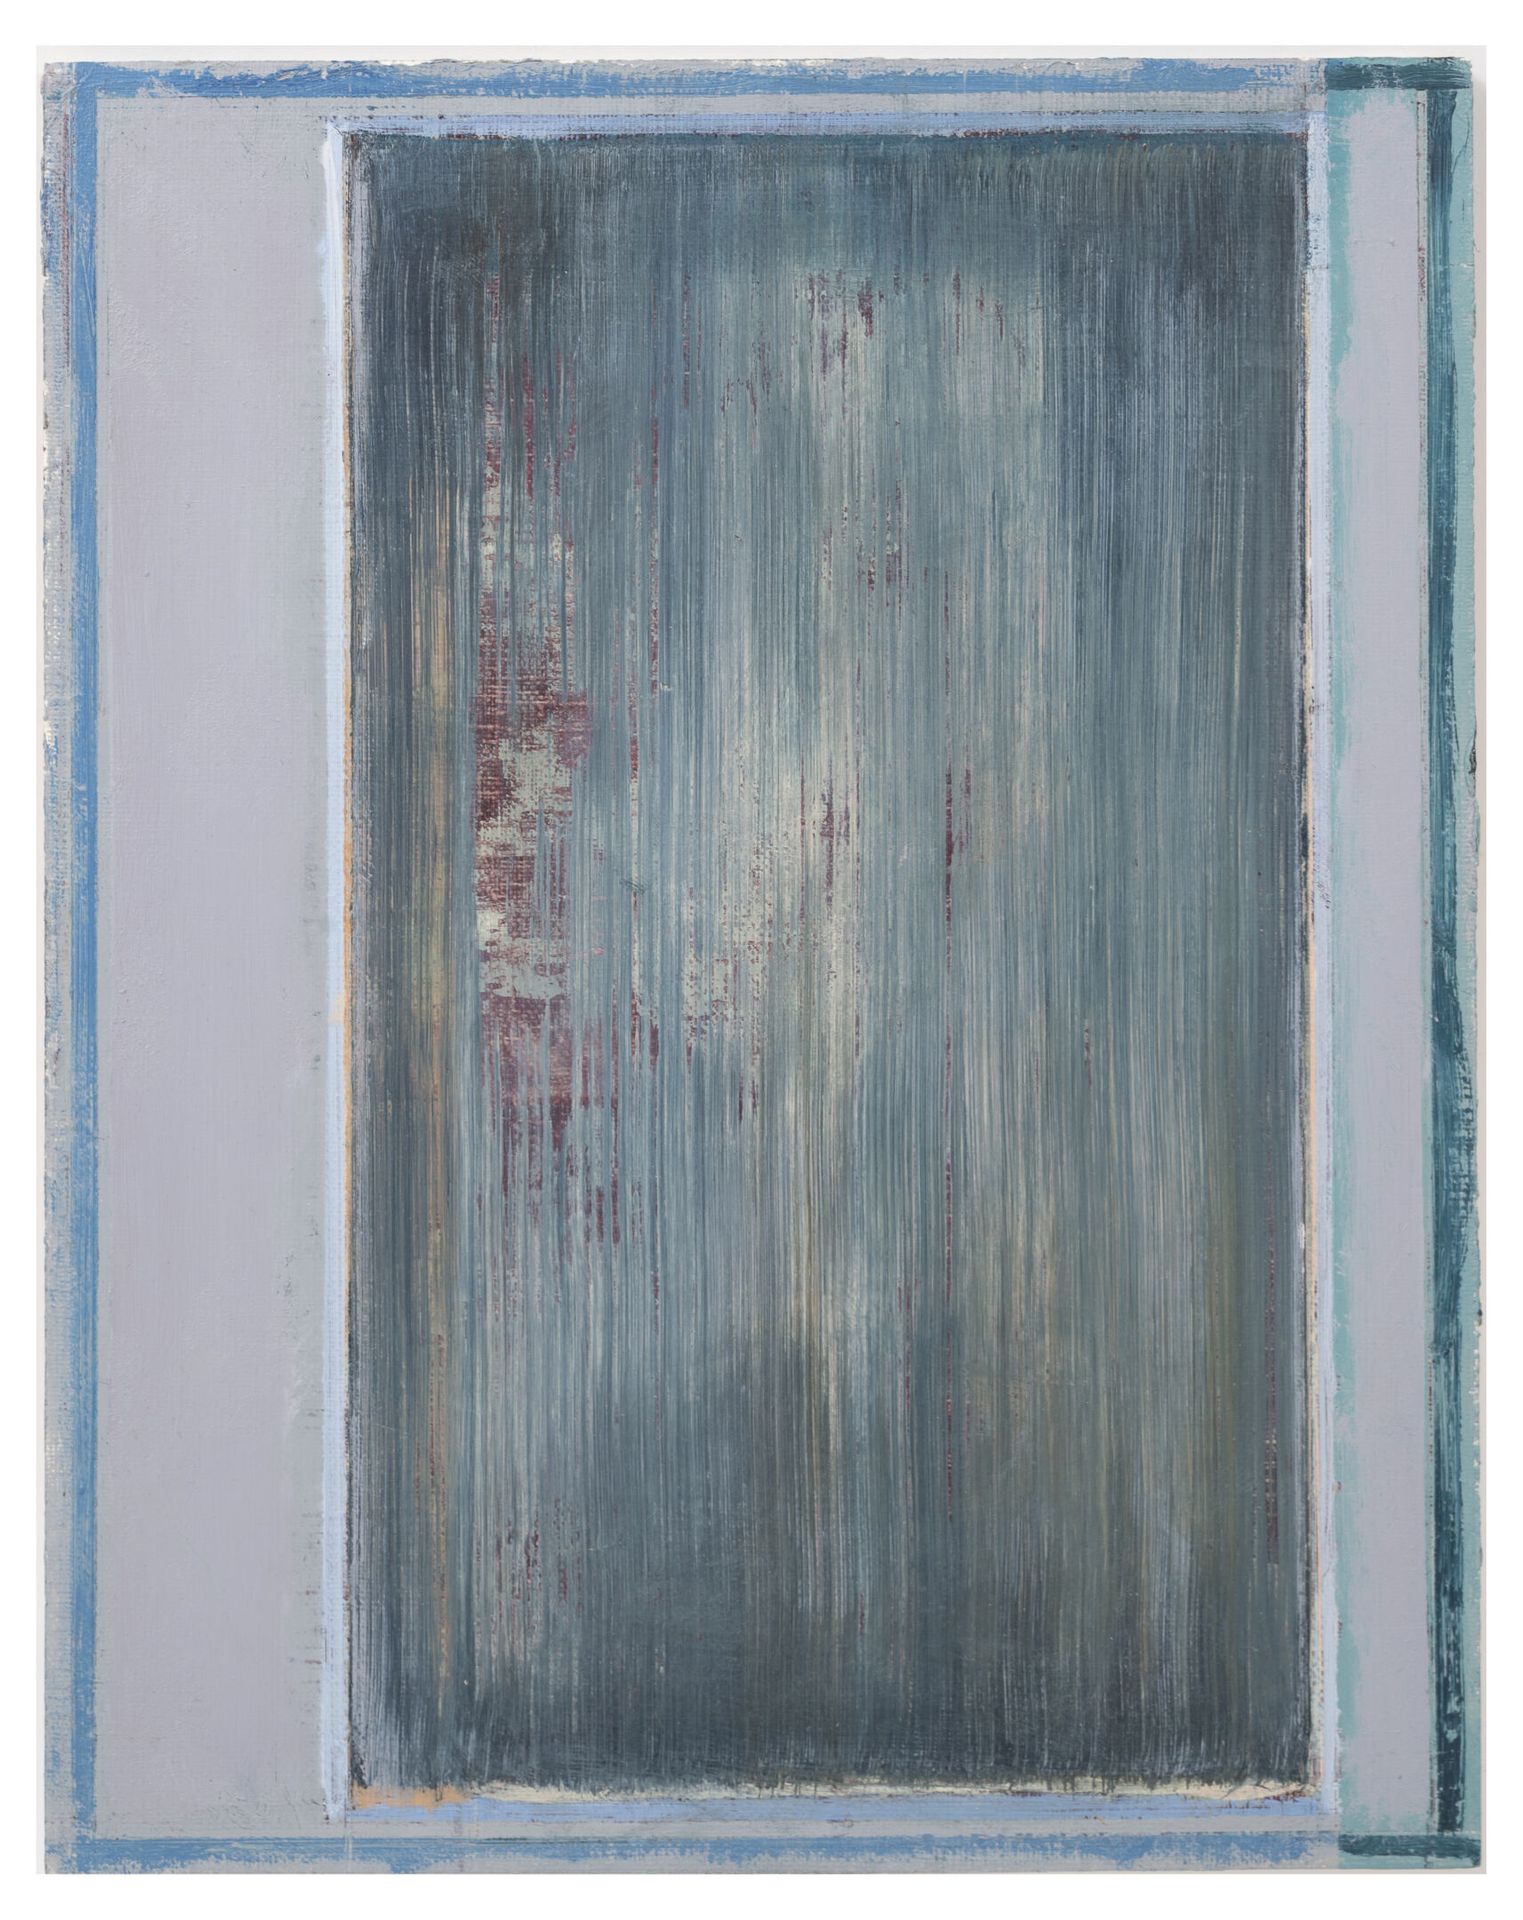 Pius FOX (1983) 无题》，2013年。

镶嵌在板上的油彩。

背面有签名和日期。

24 x 19厘米。